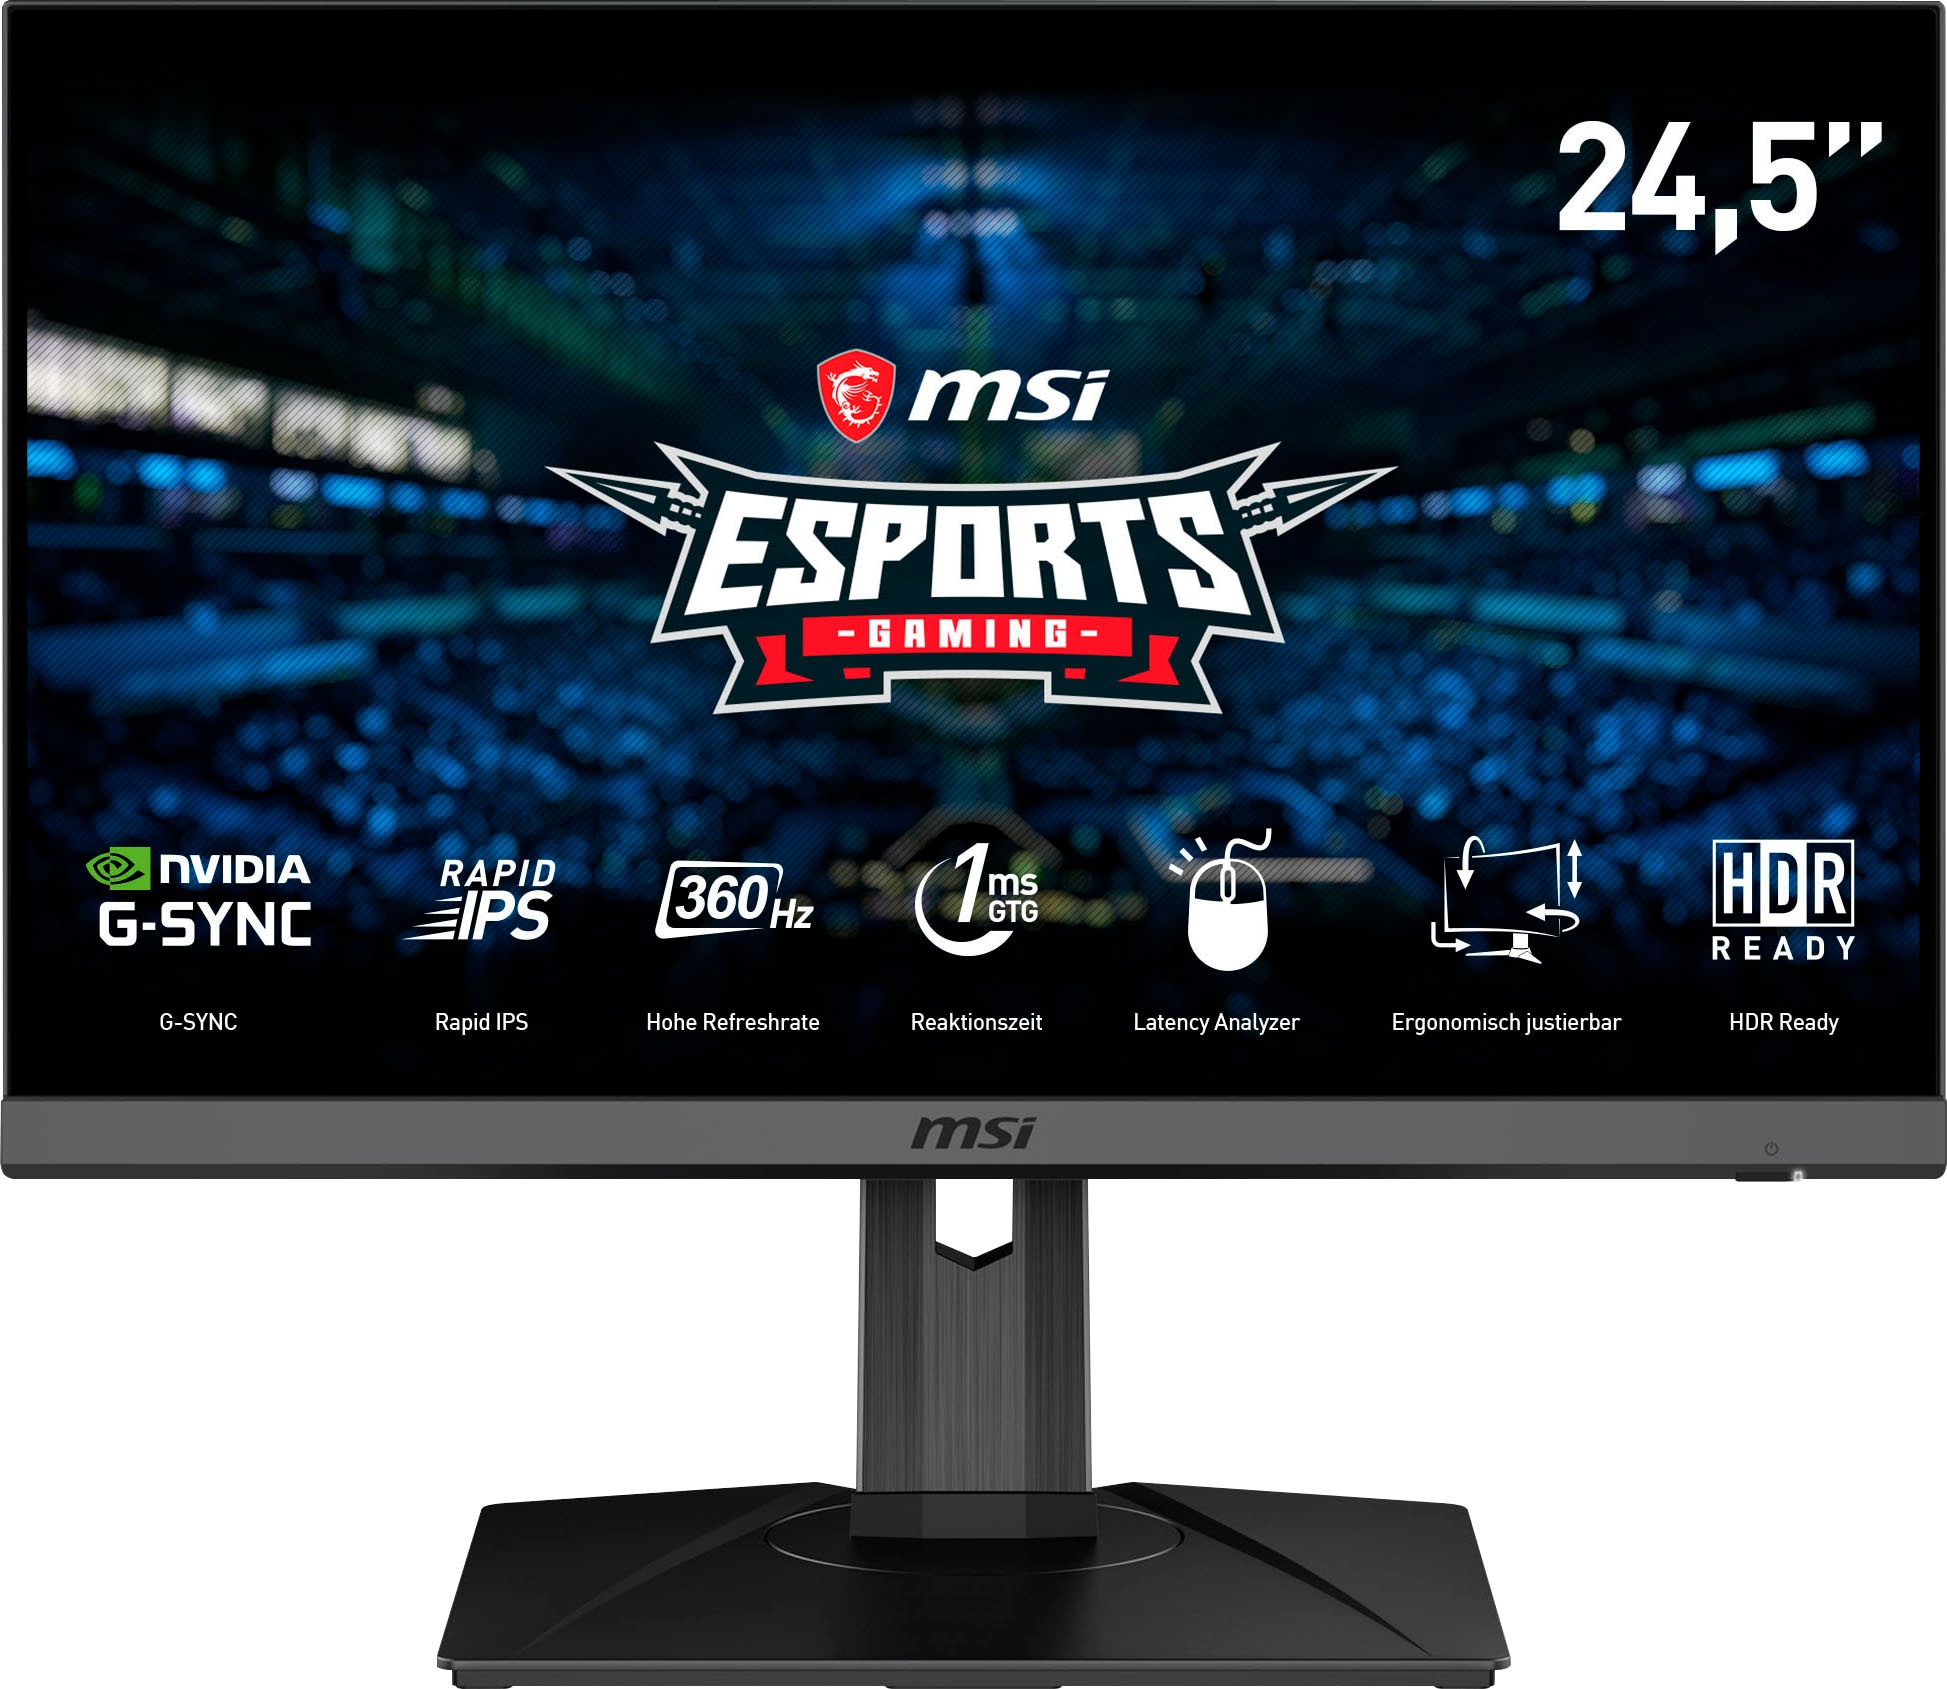 MSI Gaming-Monitor »Oculux NXG253R E-Sports«, 62,2 cm/24,5 Zoll, 1920 x 1080 px, Full HD, 1 ms Reaktionszeit, 360 Hz, NVIDIA G-Sync, 3 Jahre Herstellergarantie